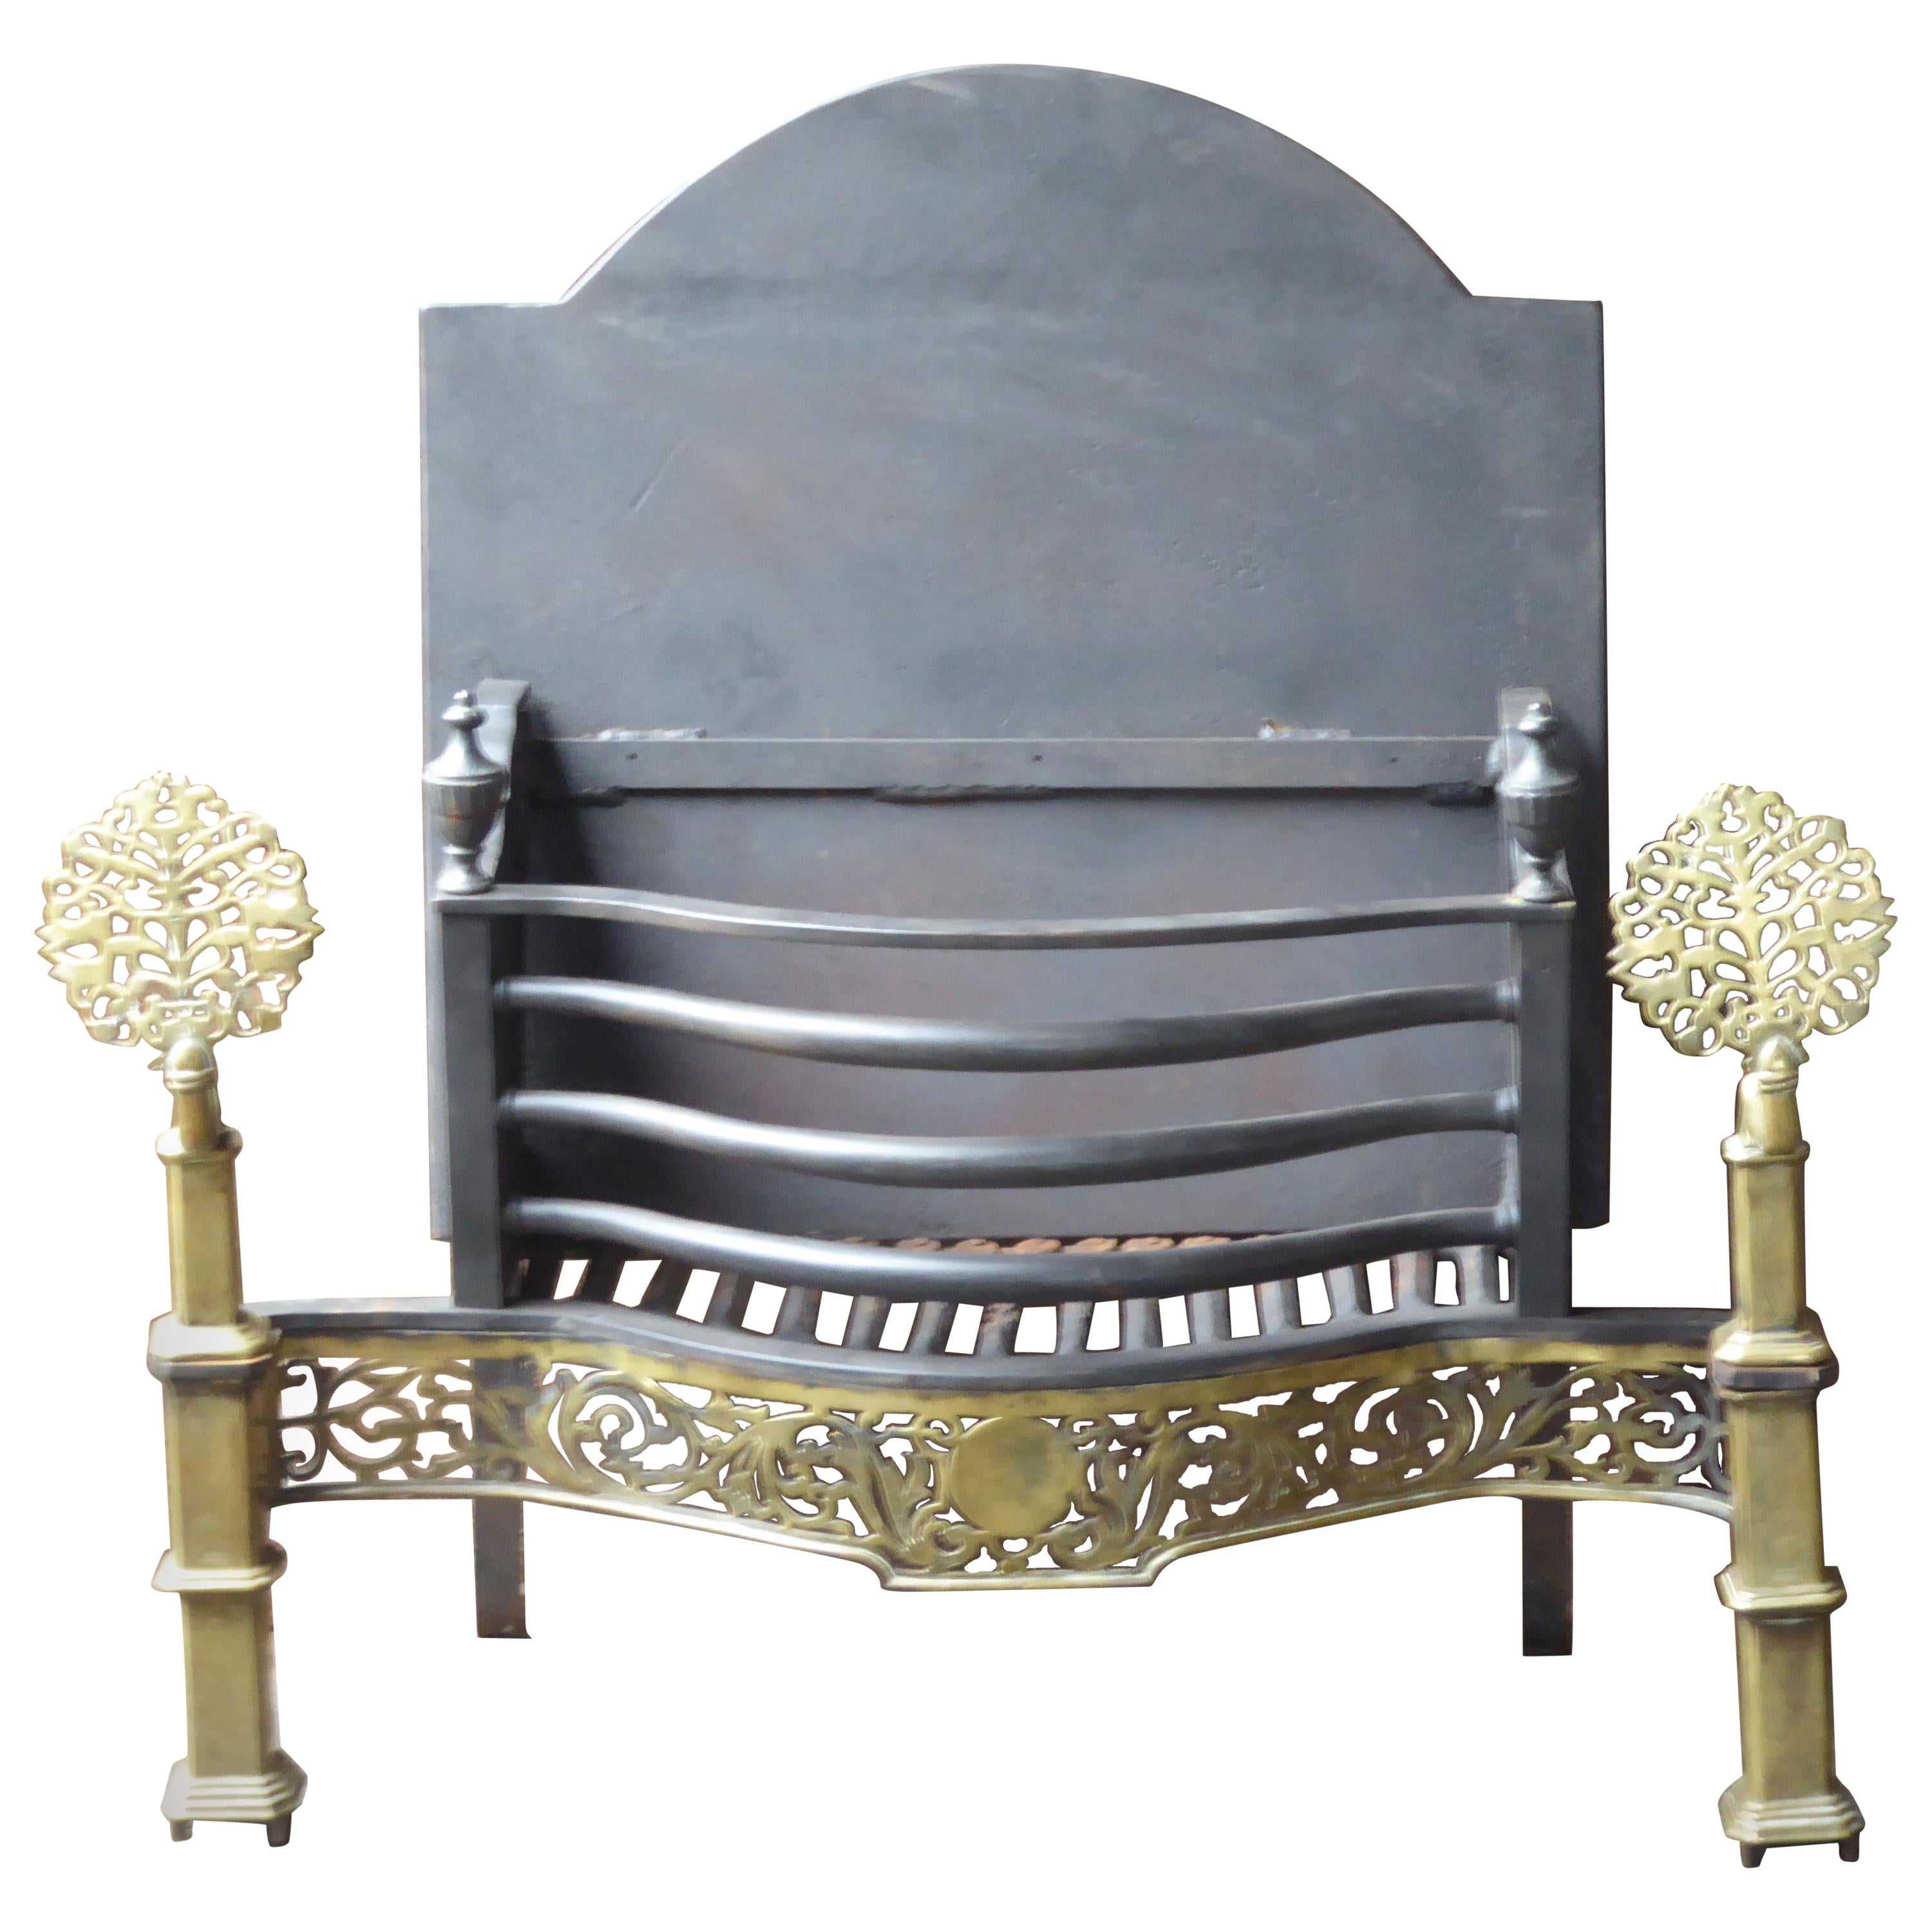 Exquisite English Art Nouveau Fireplace Grate, Fire Grate For Sale